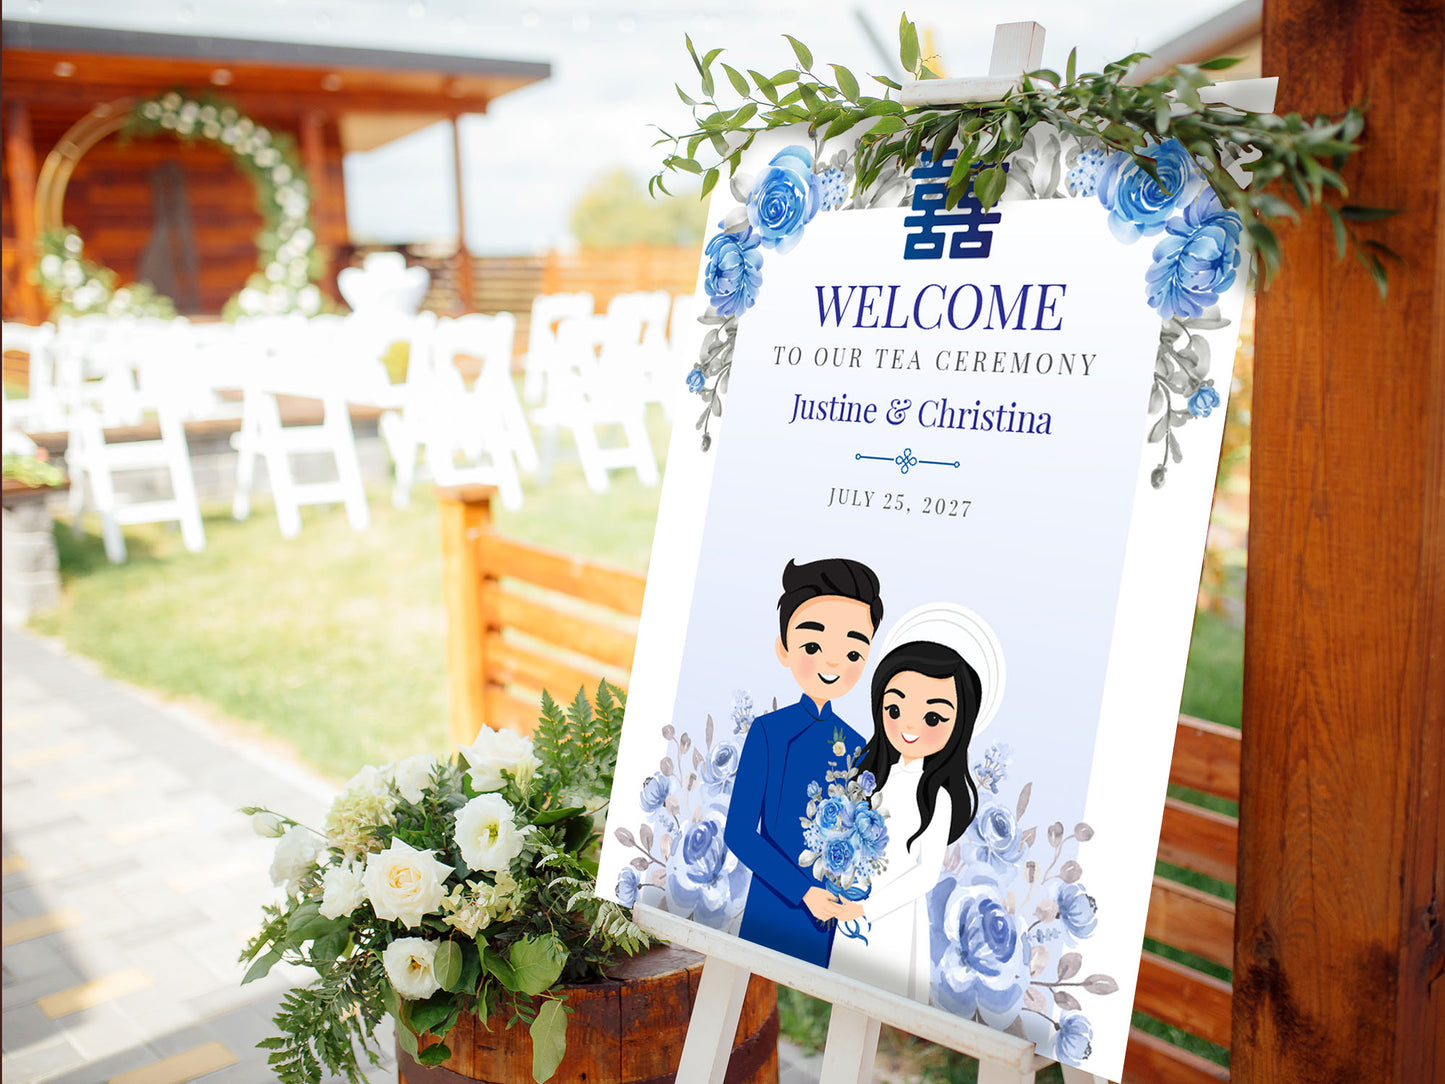 Cute Vietnamese Wedding Welcome sign, customize wedding sign, Tea ceremony event #wcsl230709